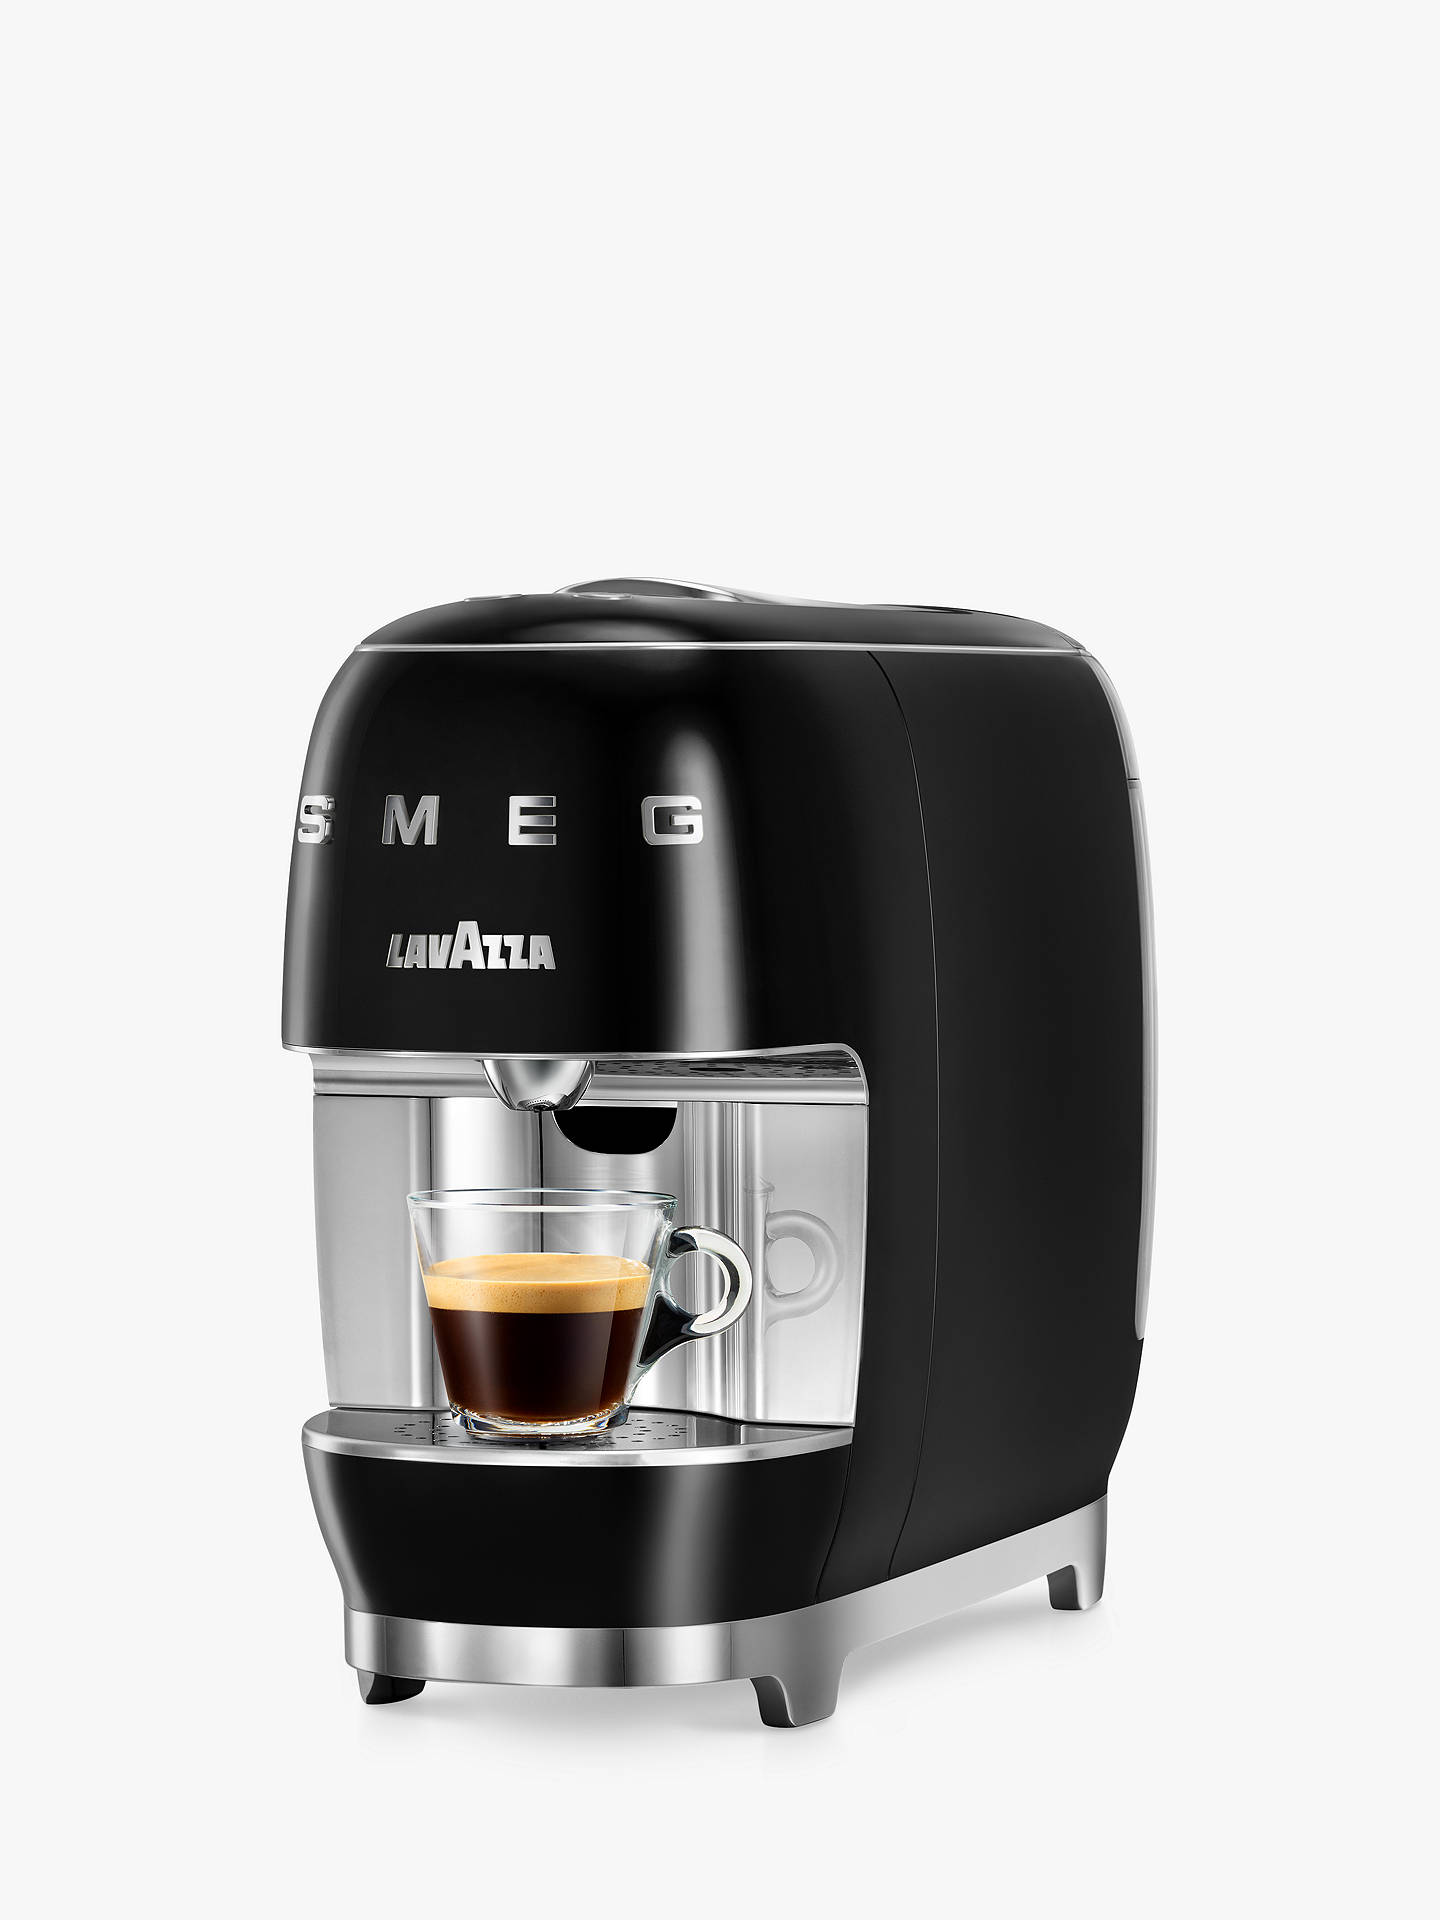 capsule coffee machine review